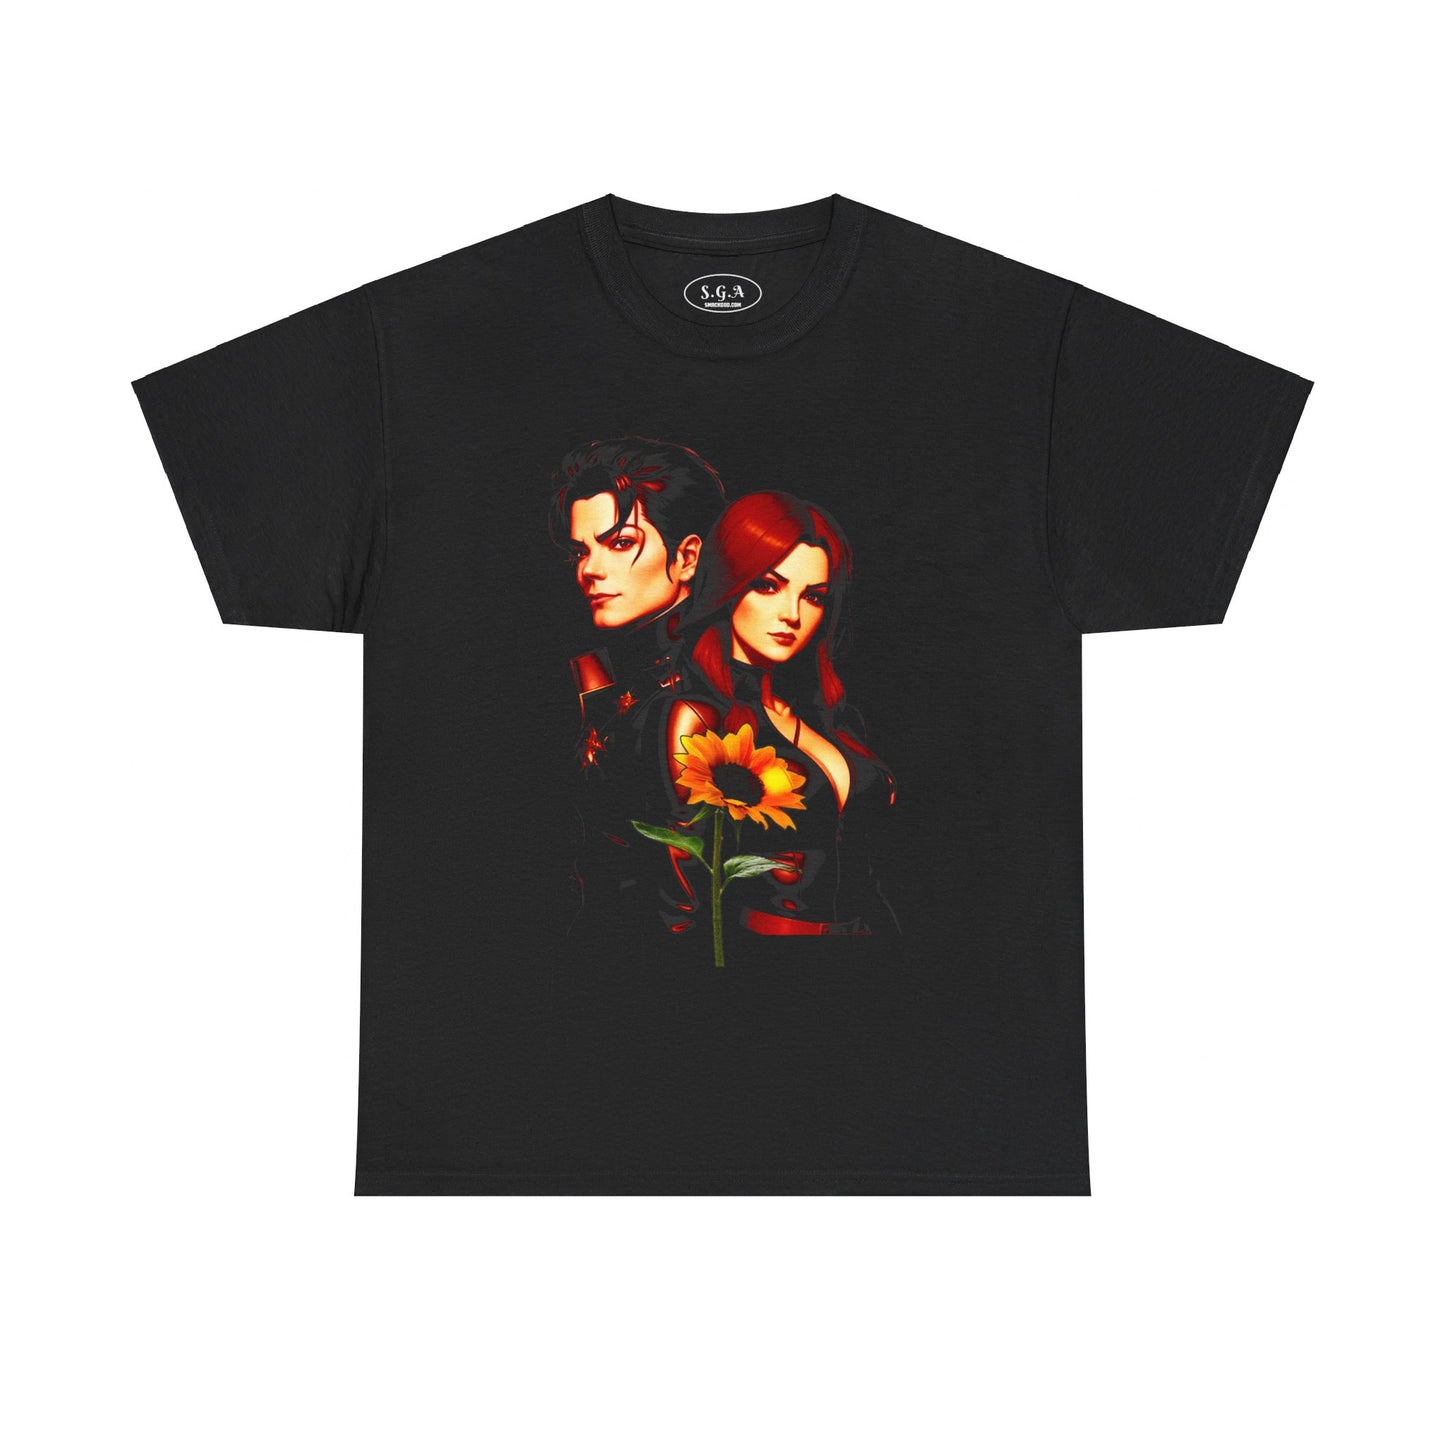 Michael Jackson & Lisa Marie Presley T Shirt